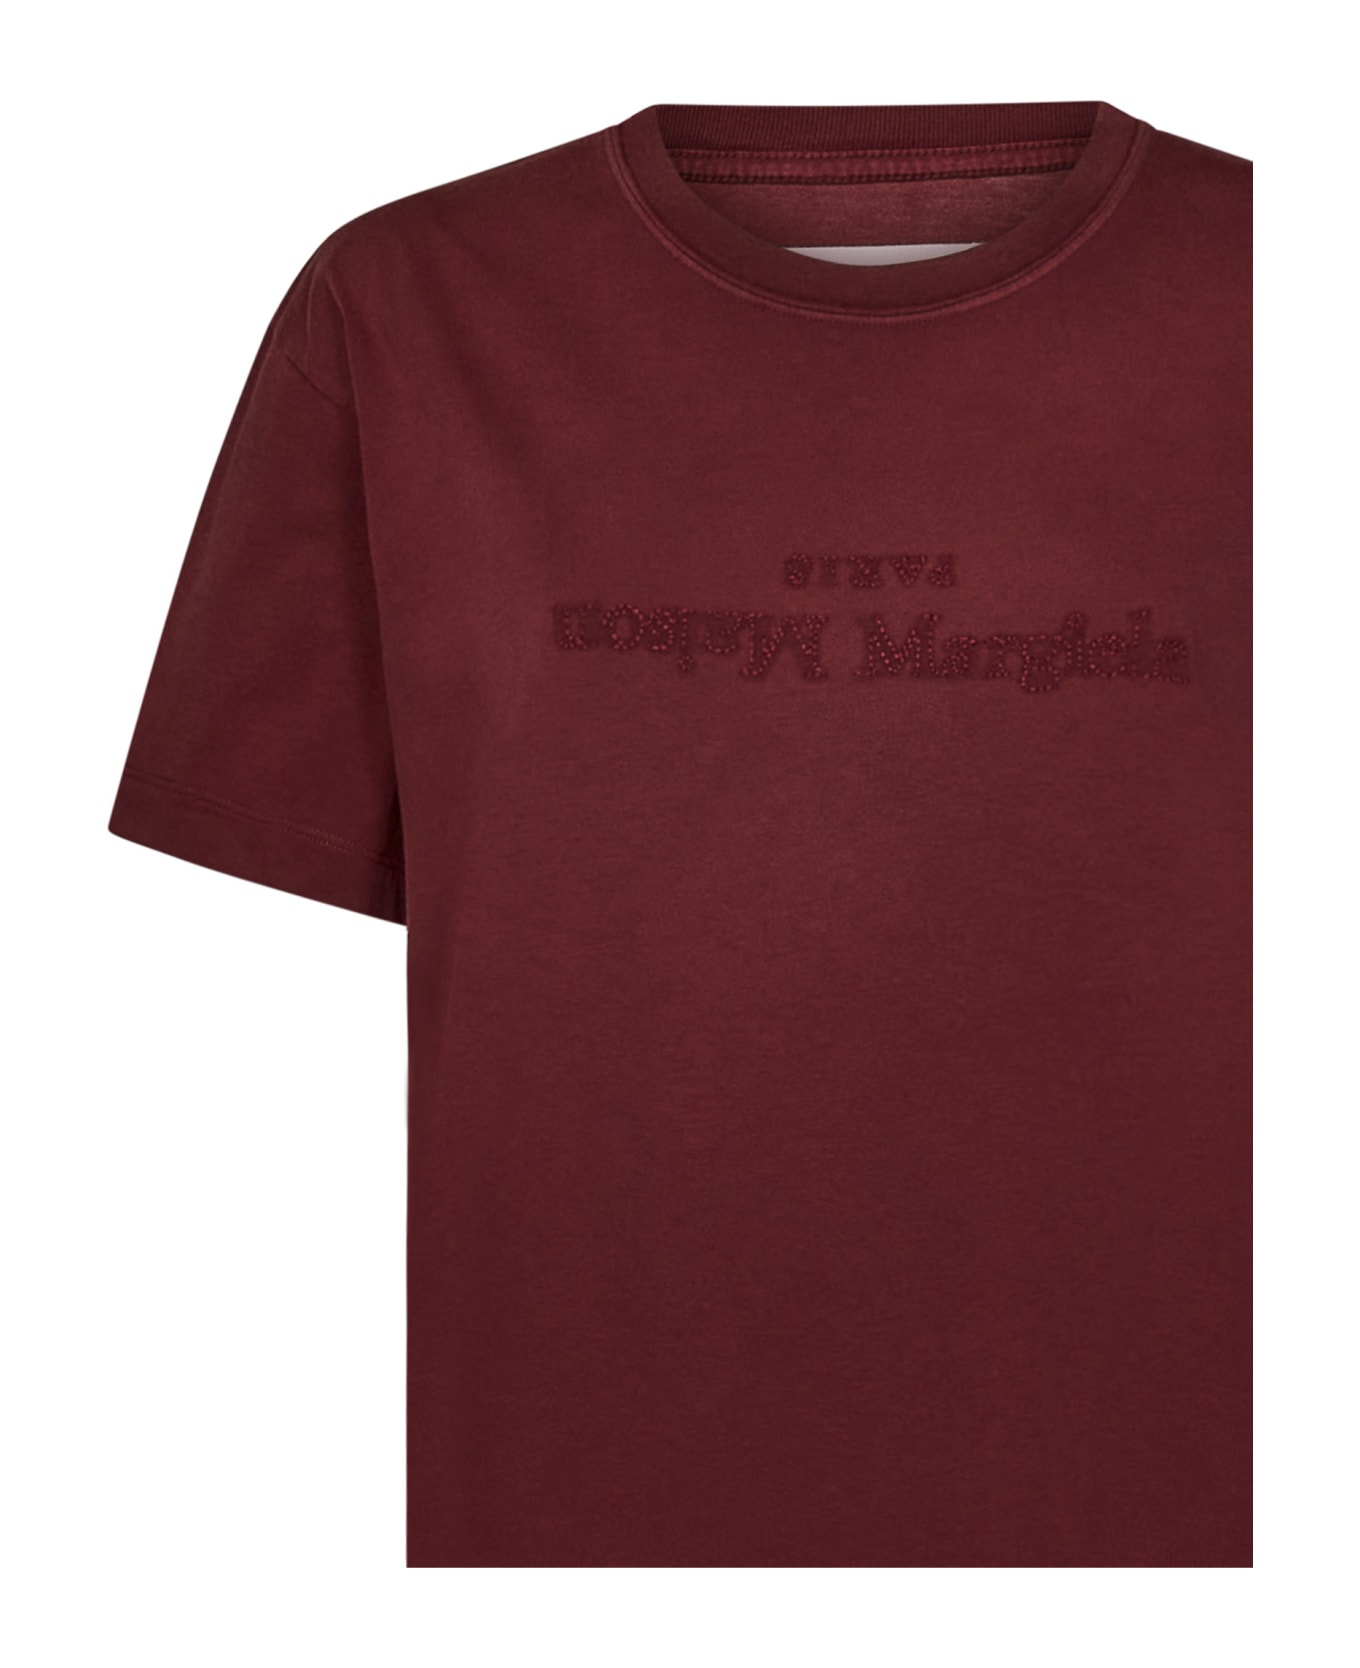 Maison Margiela T-shirt - Red Tシャツ